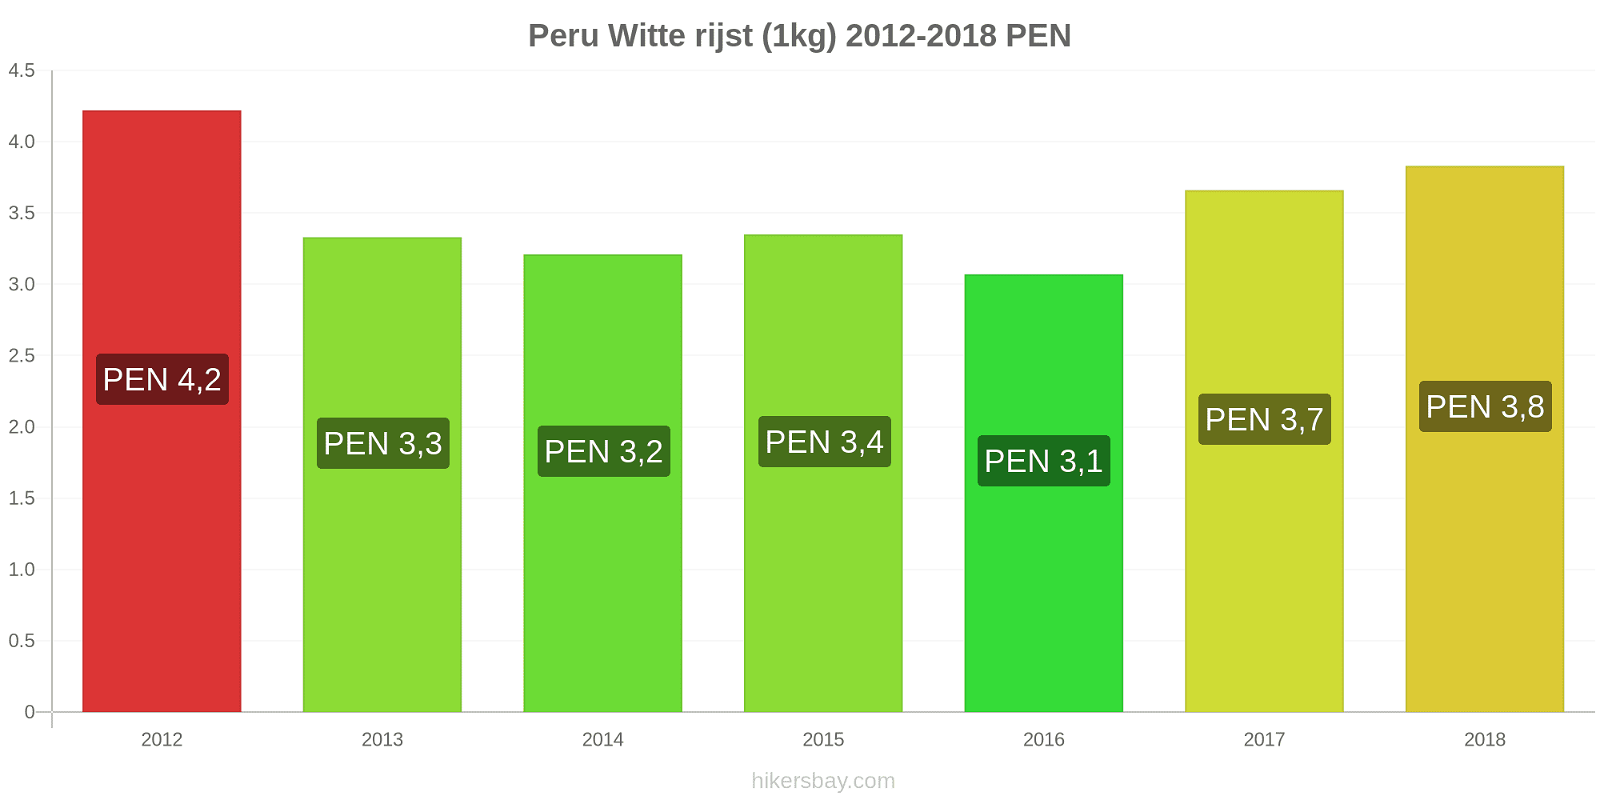 Peru prijswijzigingen Rijst (wit) (1kg) hikersbay.com